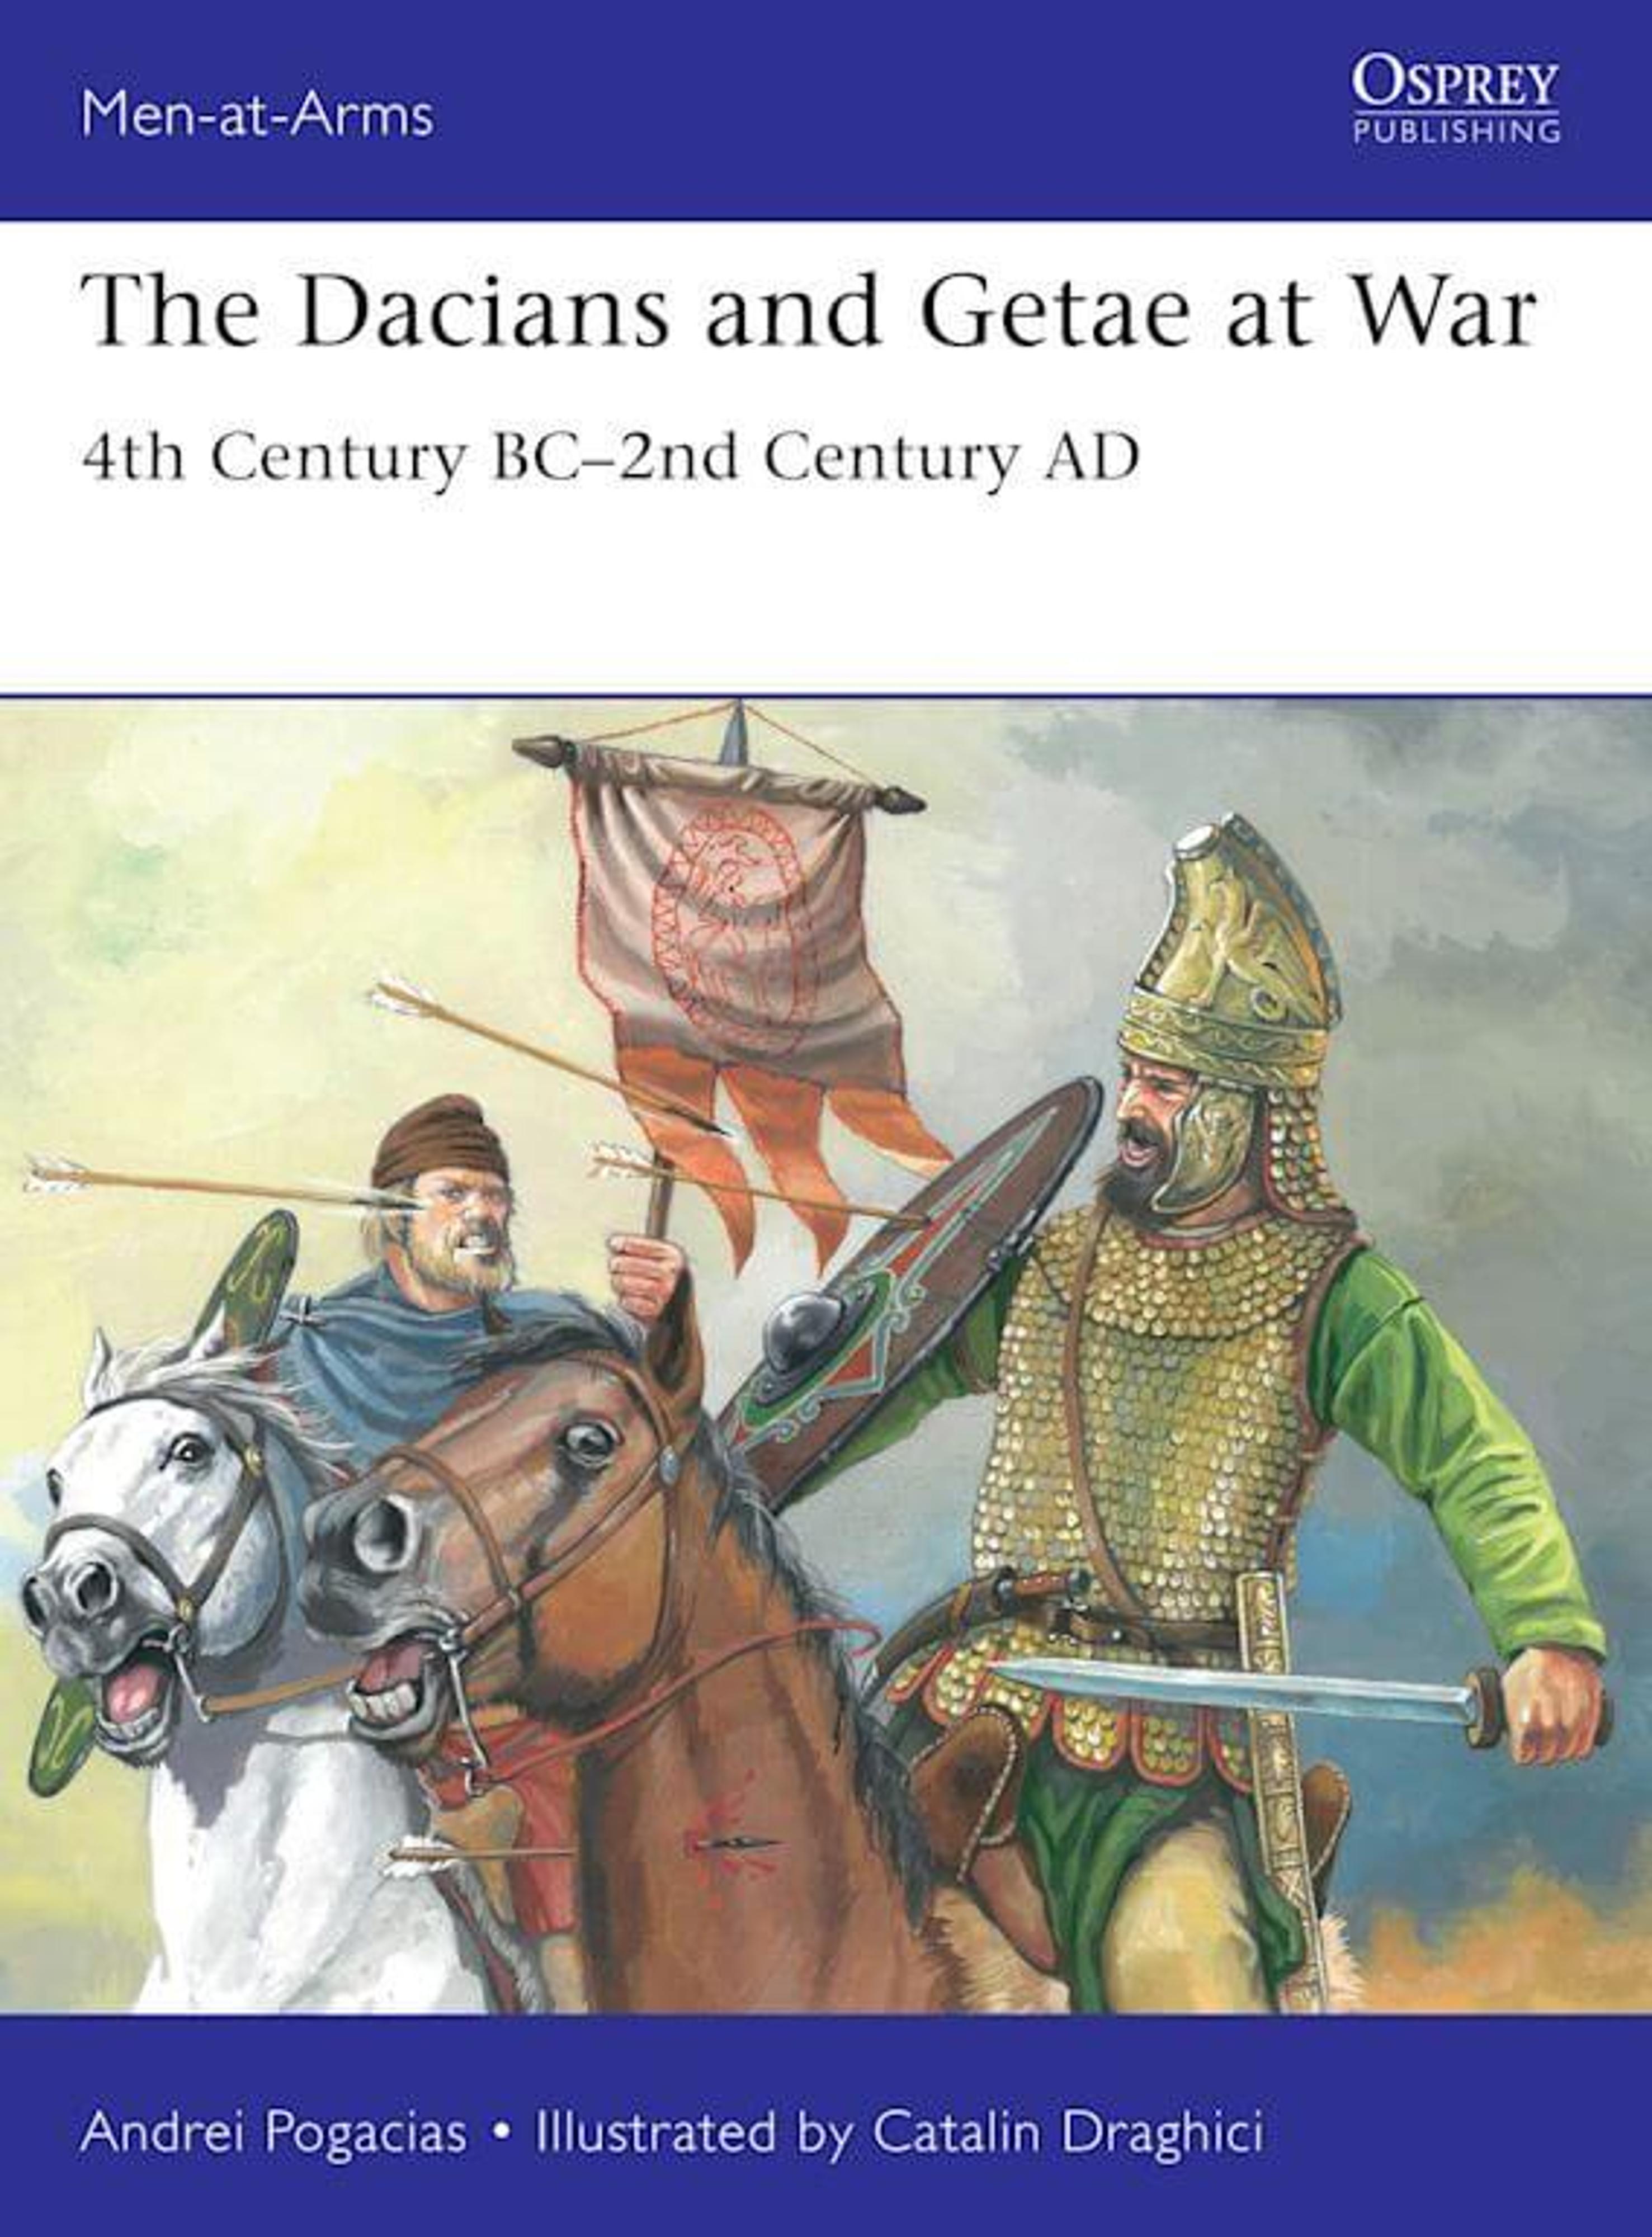 The Dacians and Getae at War: 4th Century BC - 2nd Century AD